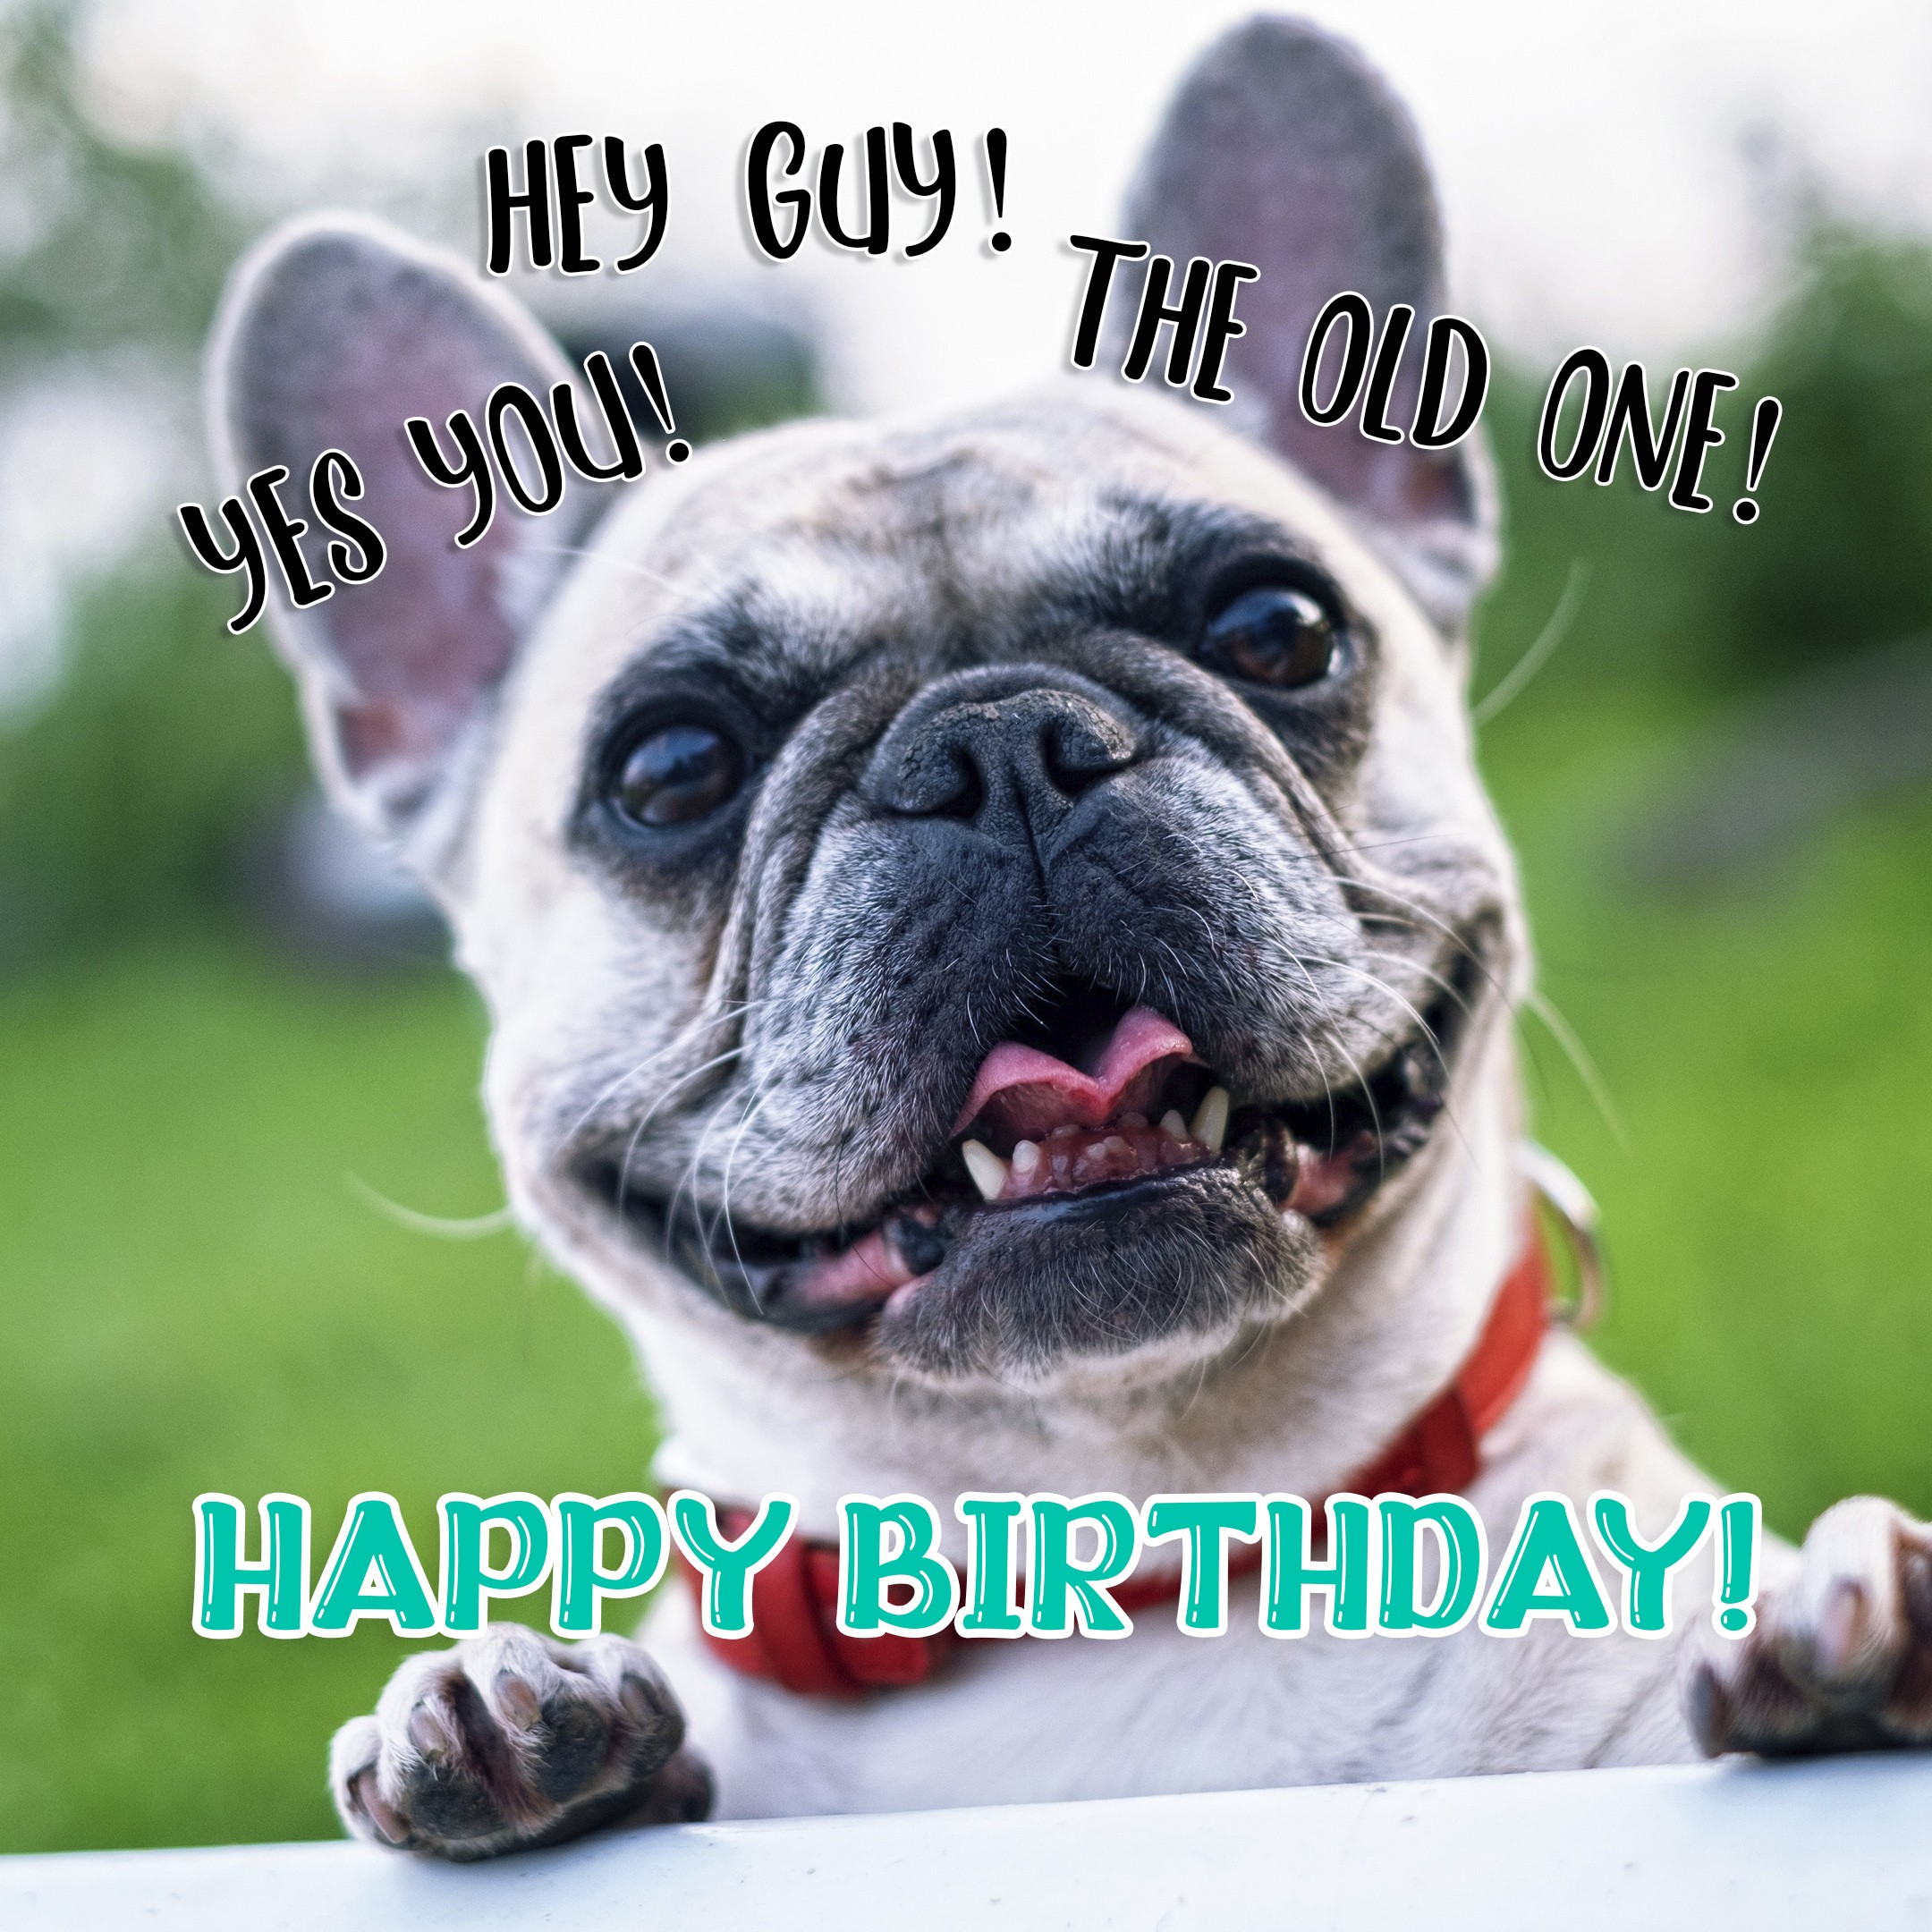 Free Funny Happy Birthday Image With Dog 